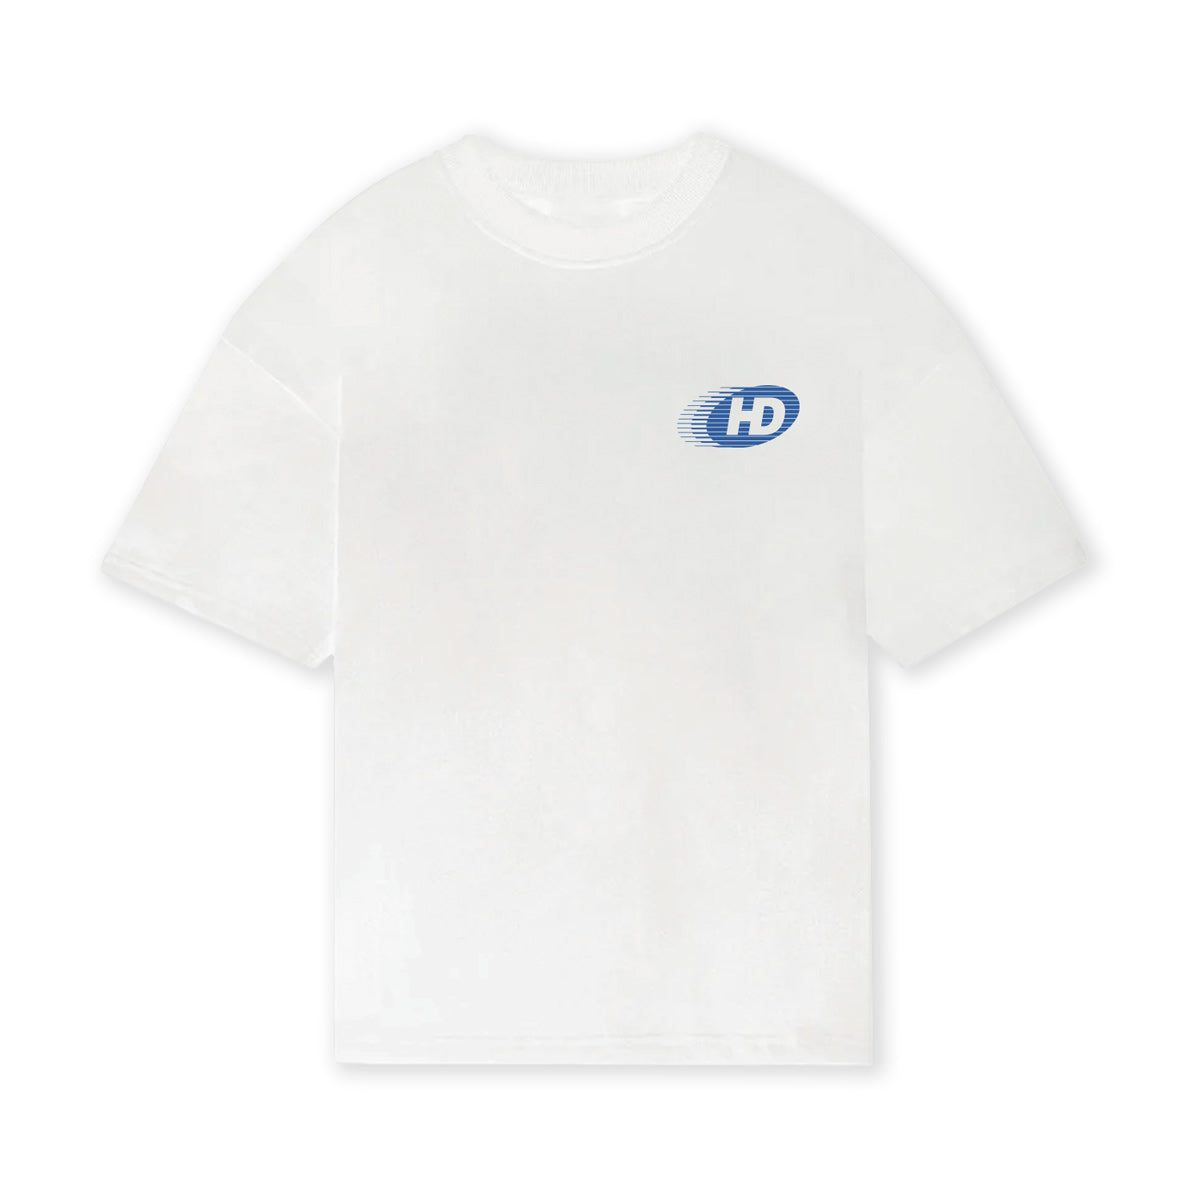 Community T-Shirt  — White - HD MUSCLE CA